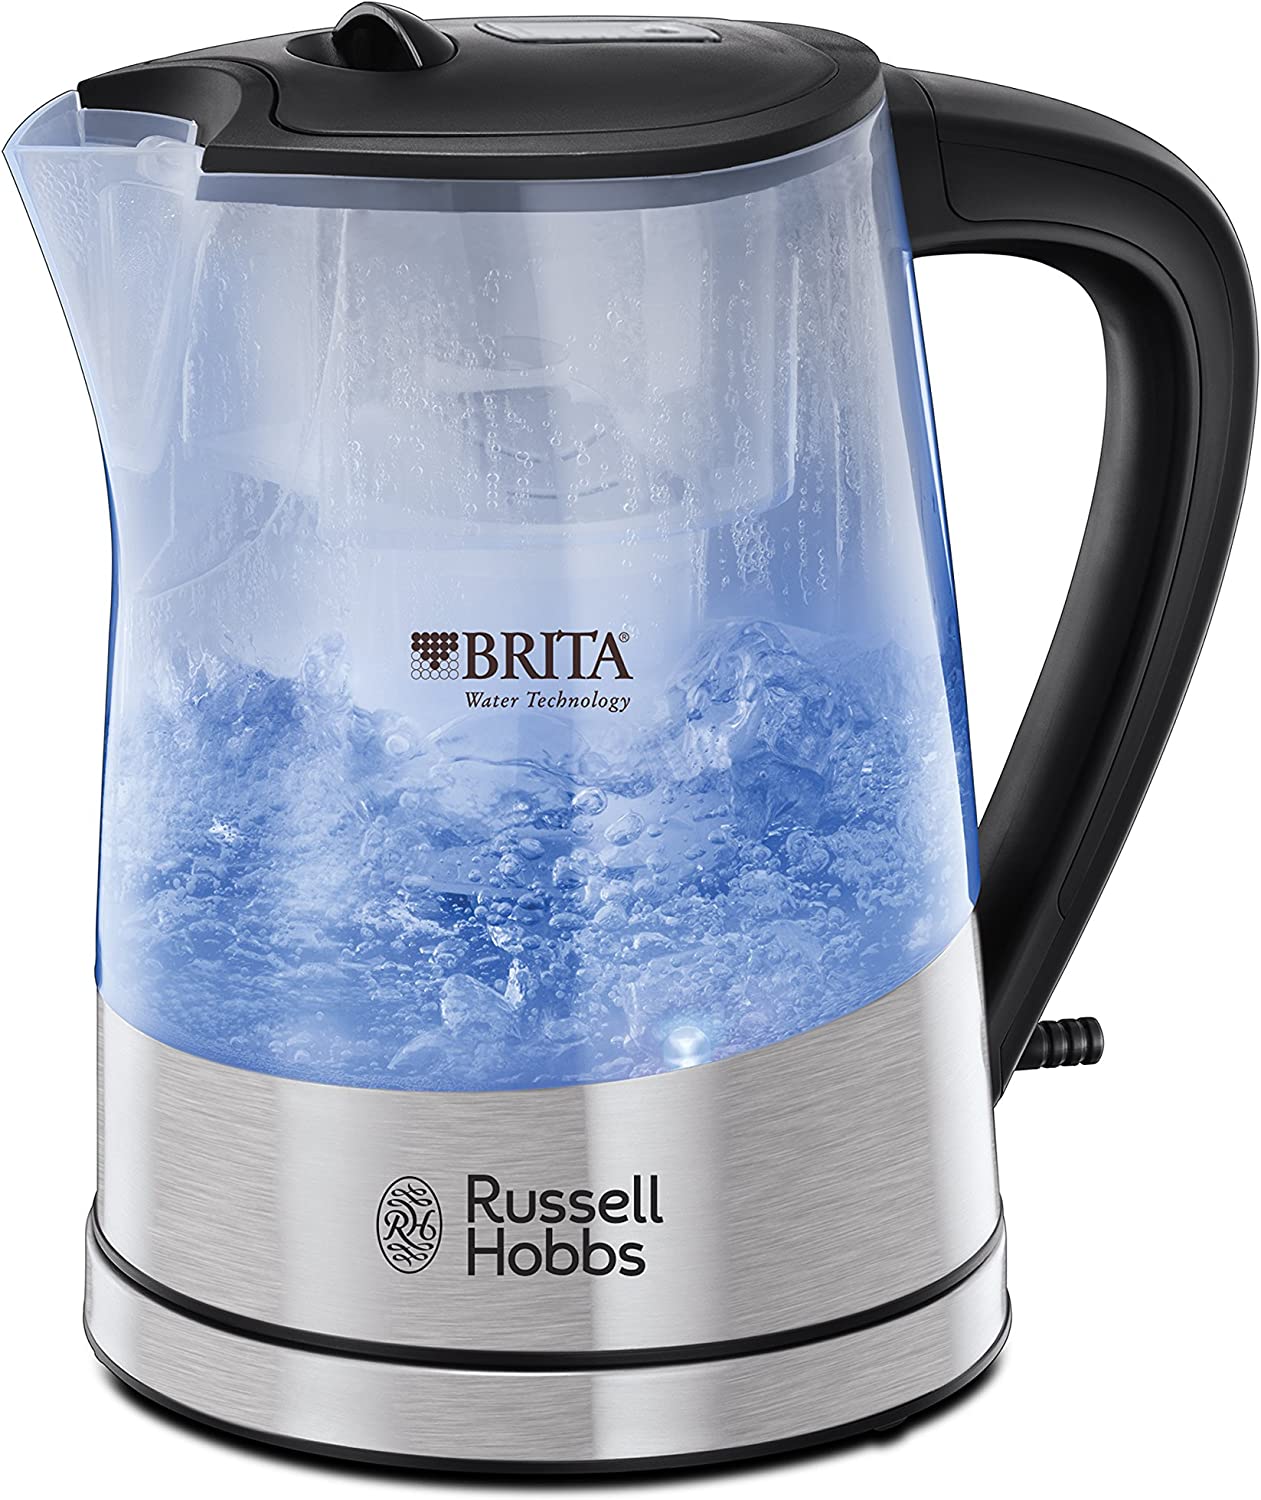 Russell Hobbs Purity Kettle, Built-in Brita Water Filter, 1.0 L + 0.5 L Filter Insert, 2200 W, LED Lighting, Includes Filter Cartridge, Capacity Marker, Tea Maker 22850-70